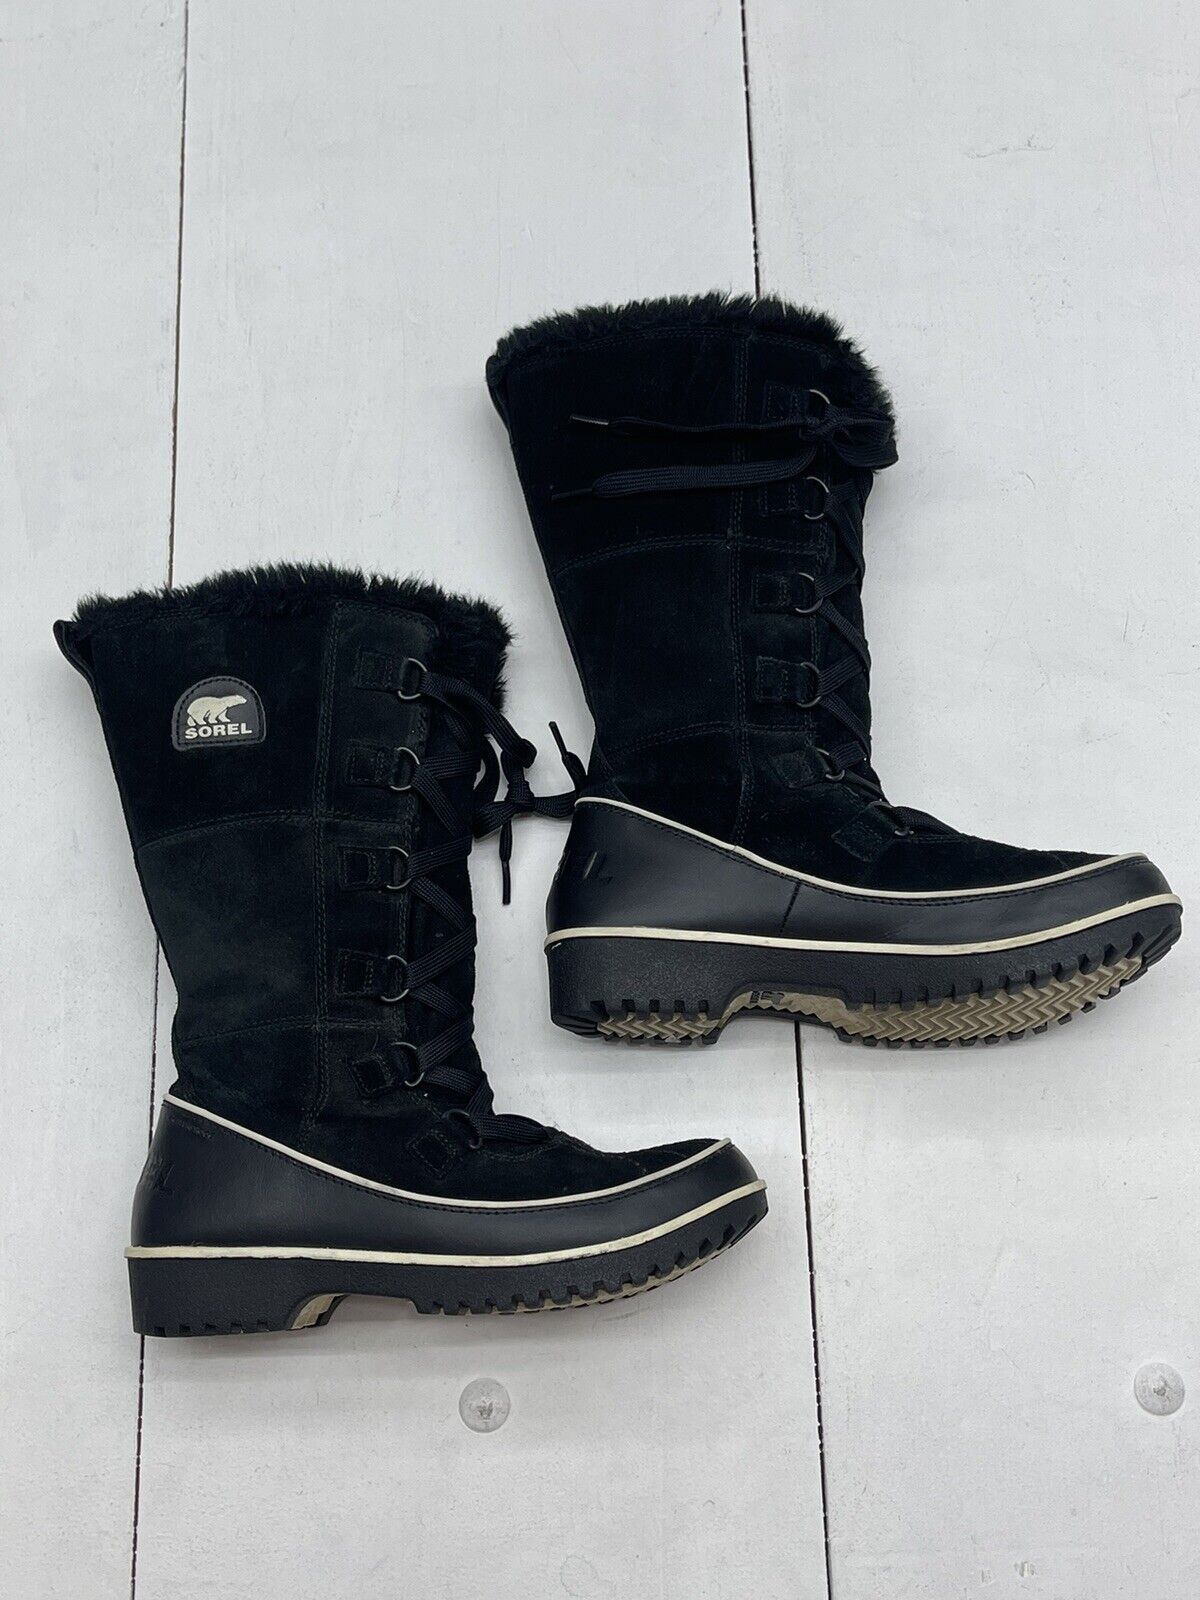 Sorel Tivoli II Tall Black Suede Waterproof Winter Boots Women's N  beyond exchange